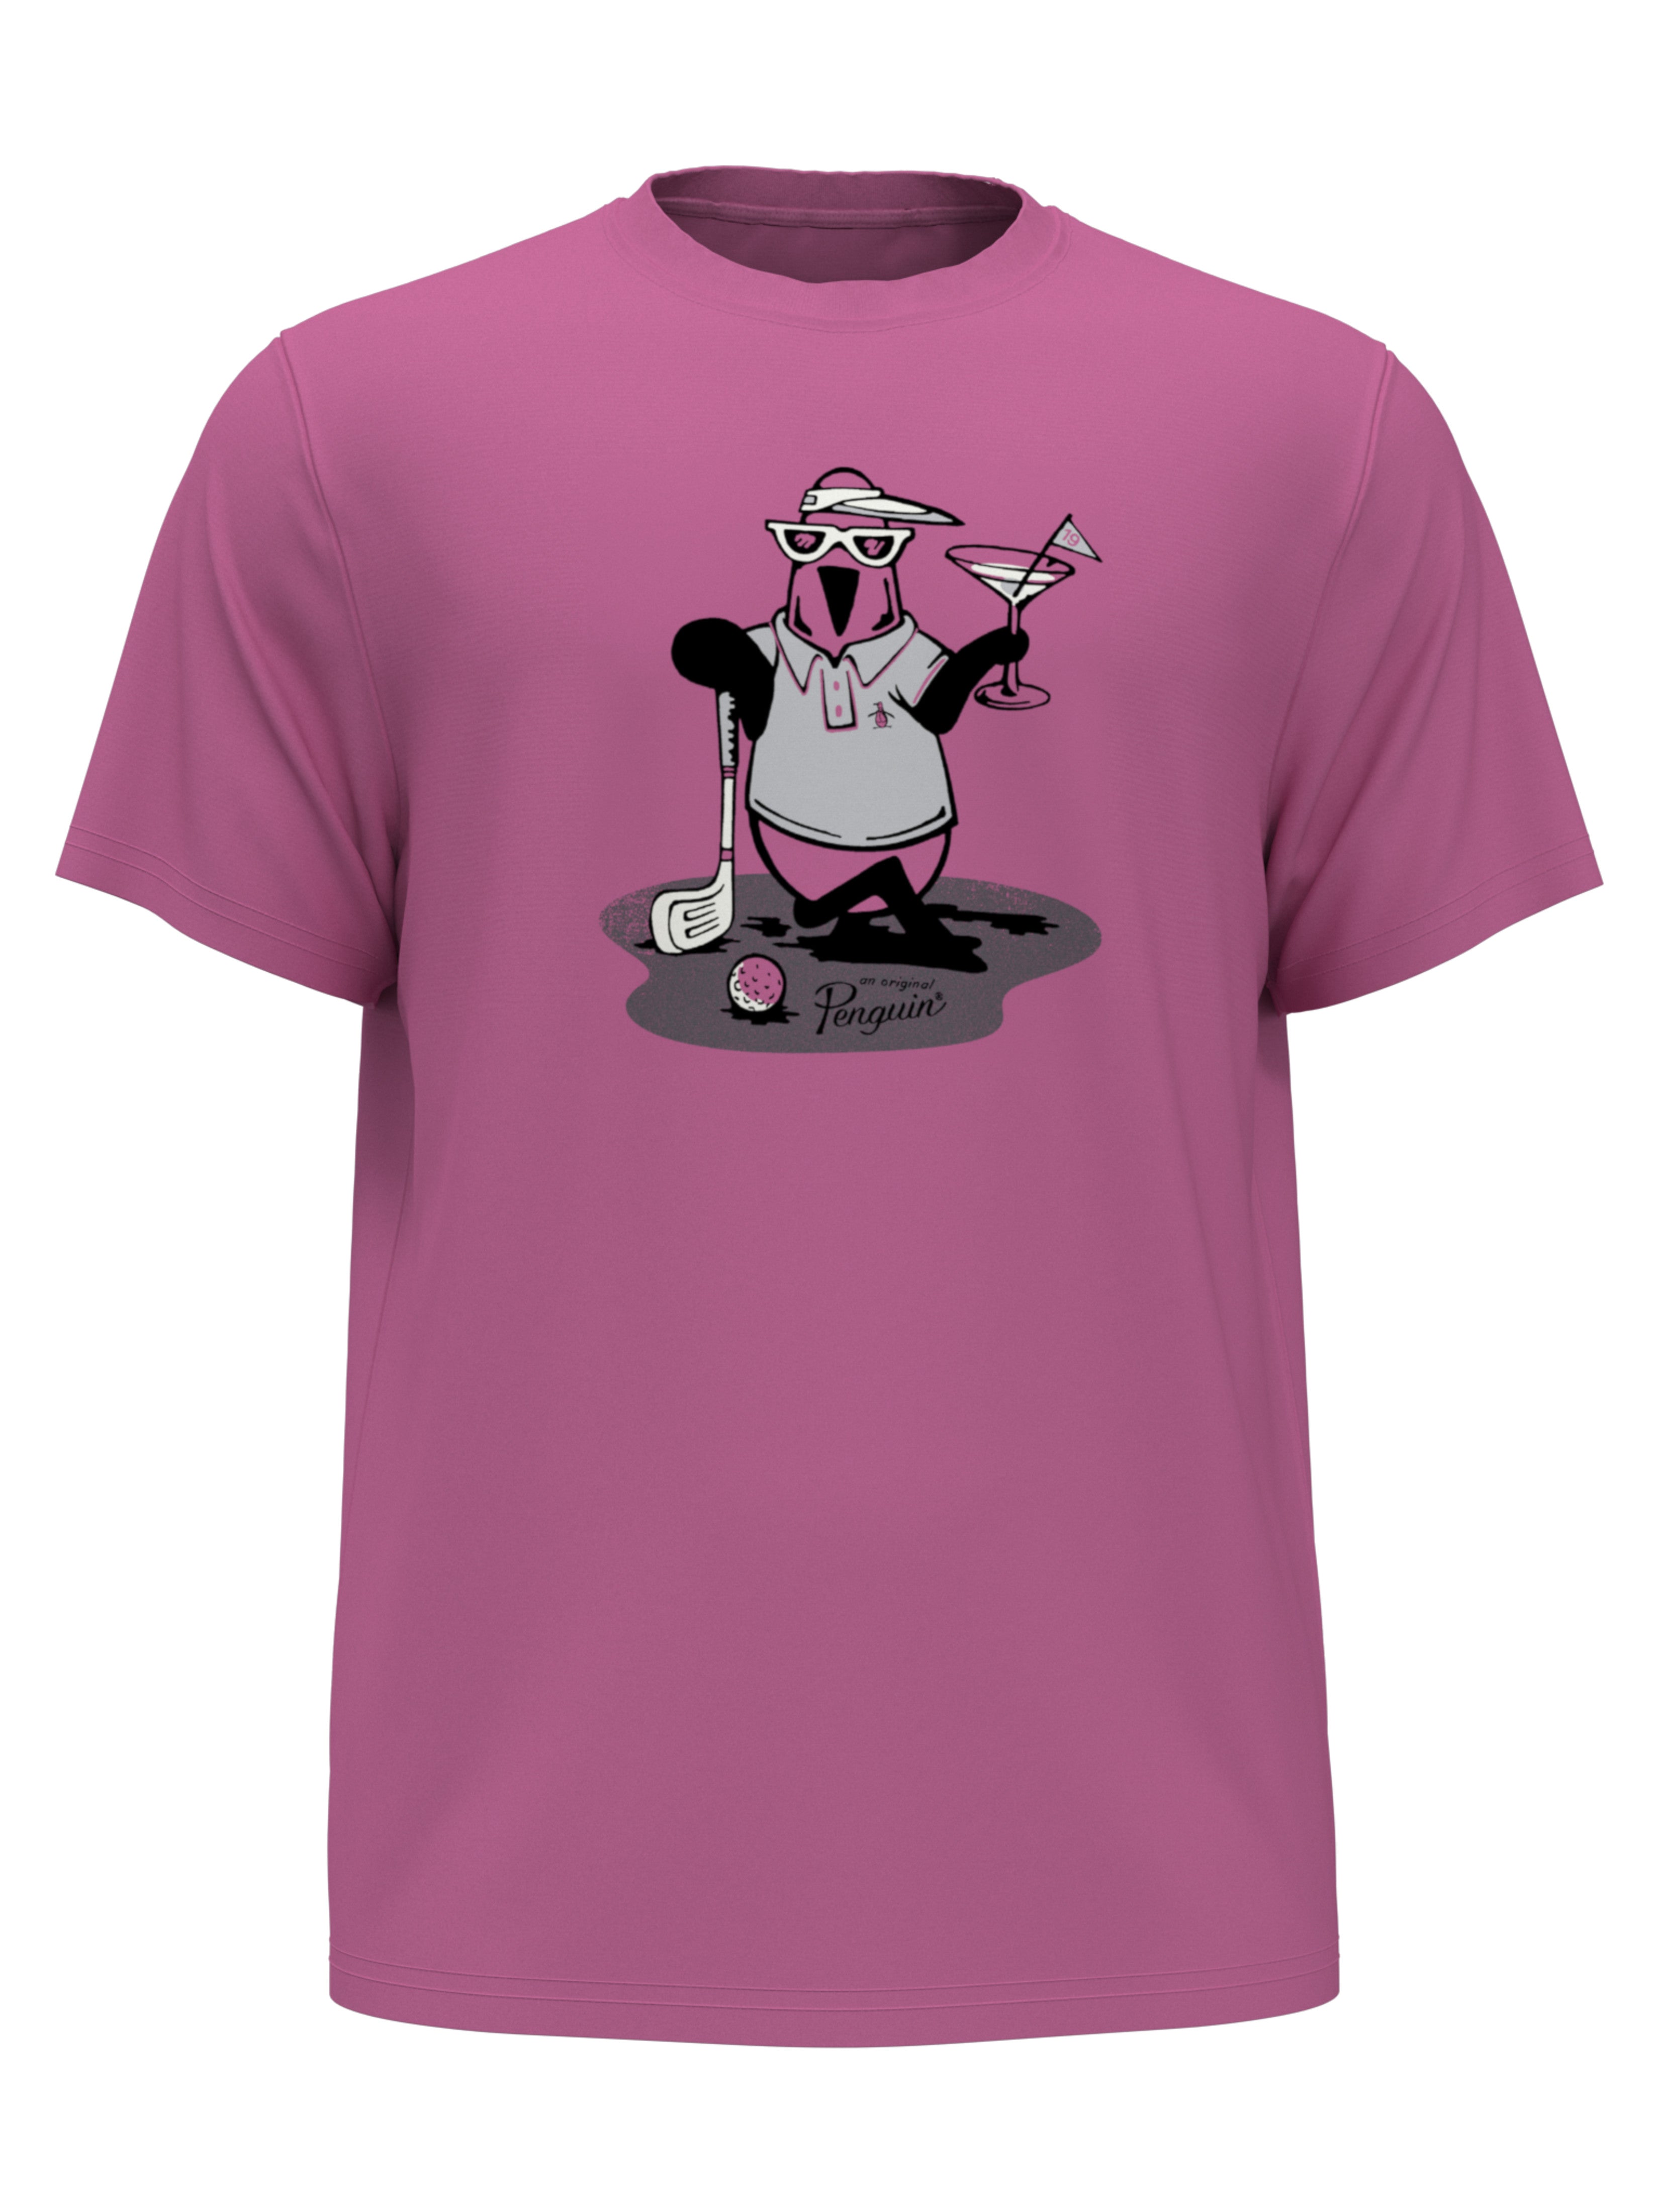 Original Penguin Mens Petes In Da Party Graphic Golf T-Shirt, Size Medium, Rose Bouquet Pink, 100% Cotton | Golf Apparel Shop